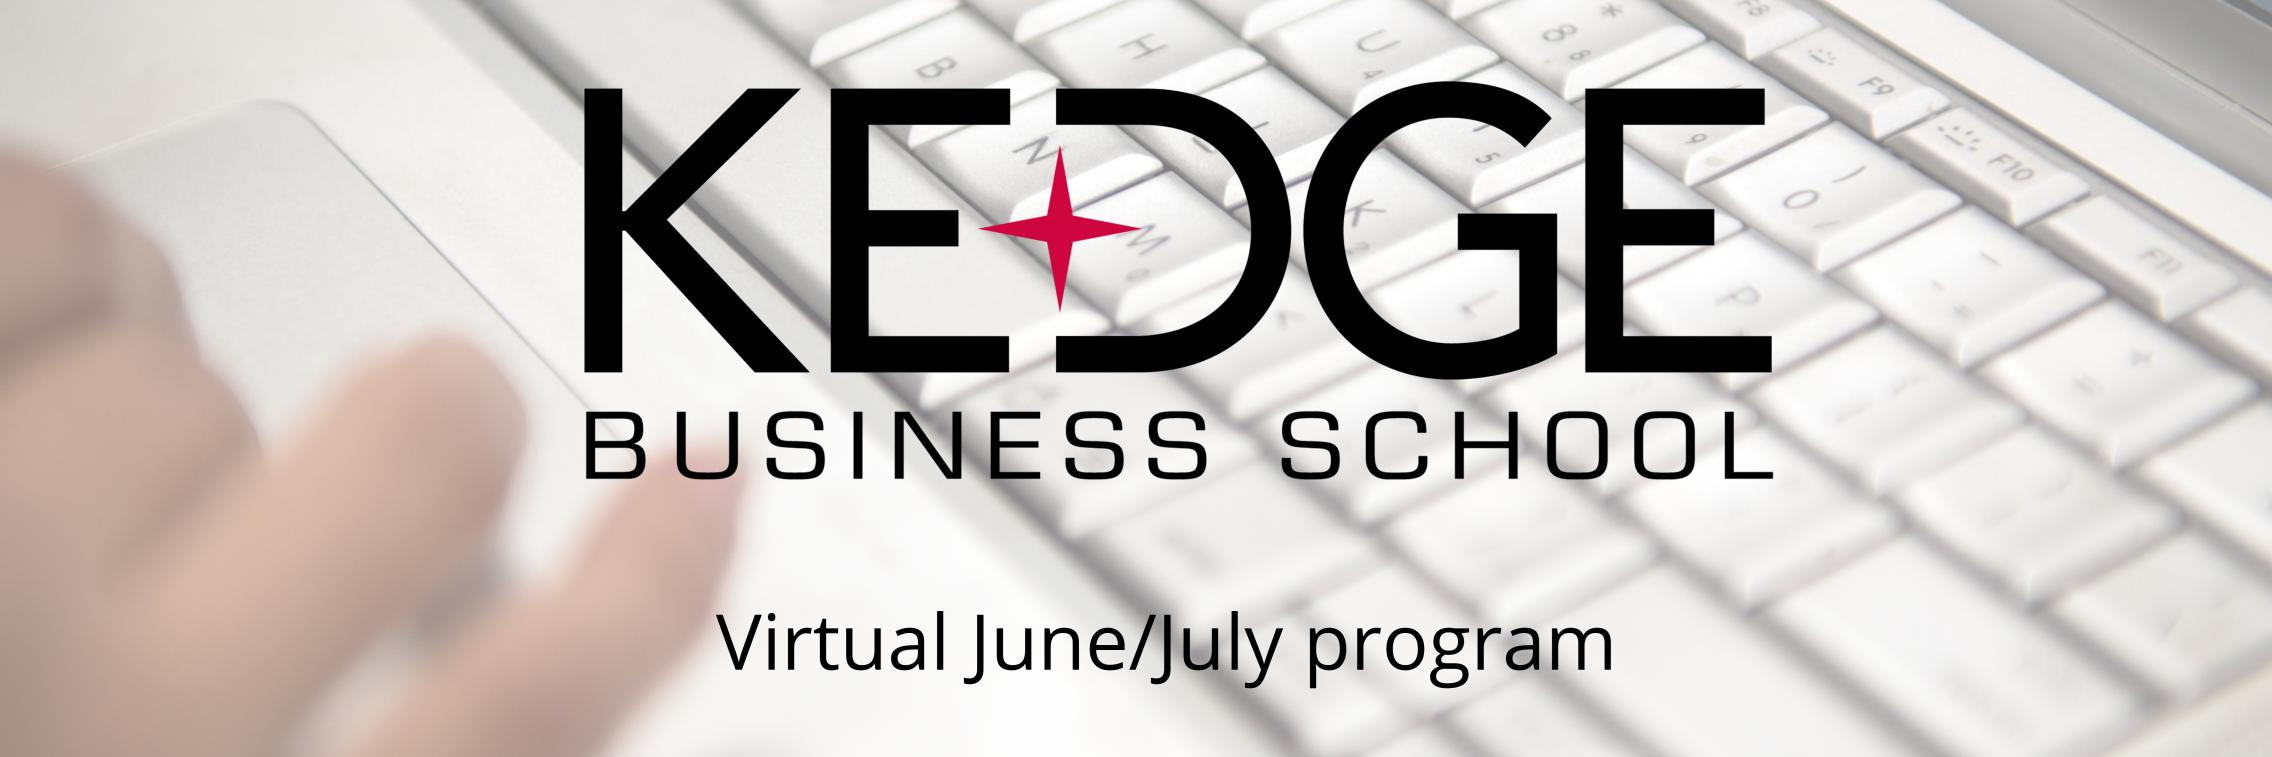 KEDGE Business School Virtual June/July program